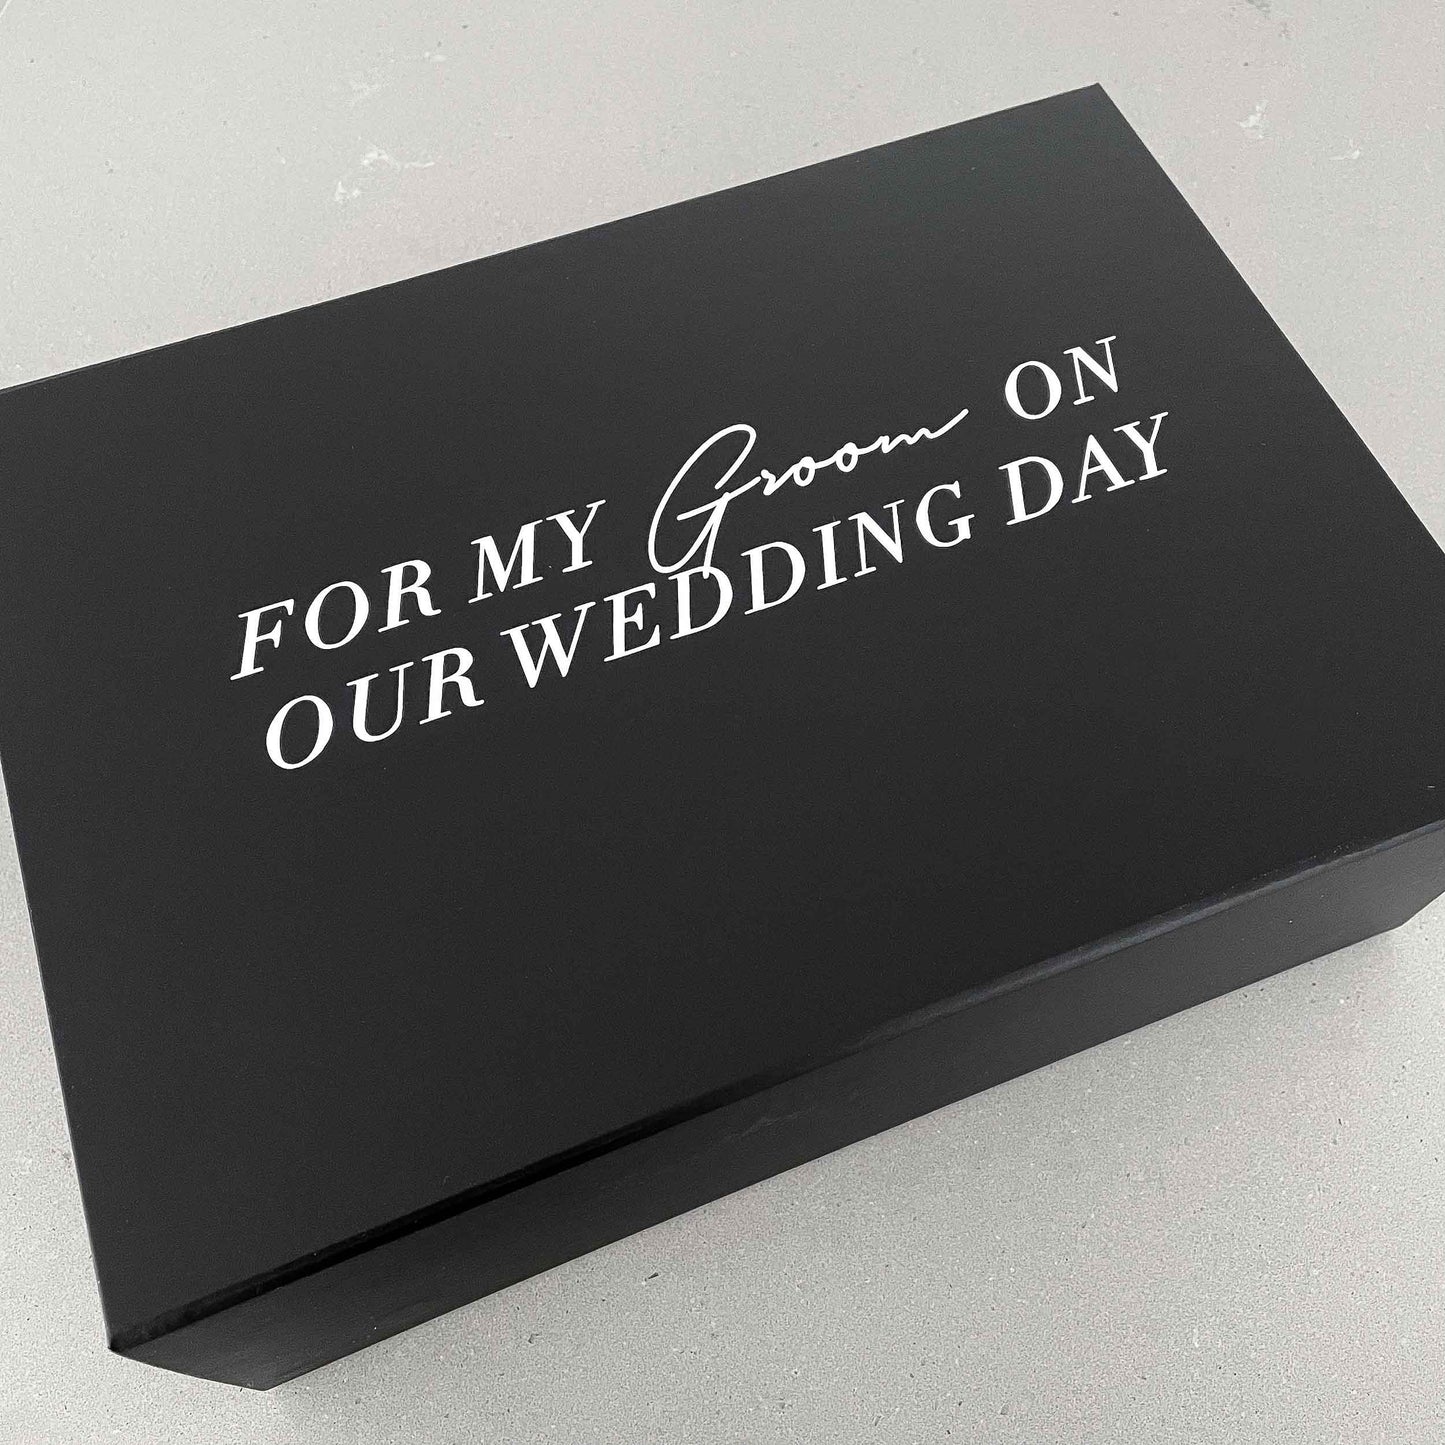 For My Groom Wedding Gift Box - Vorfreude Stationery